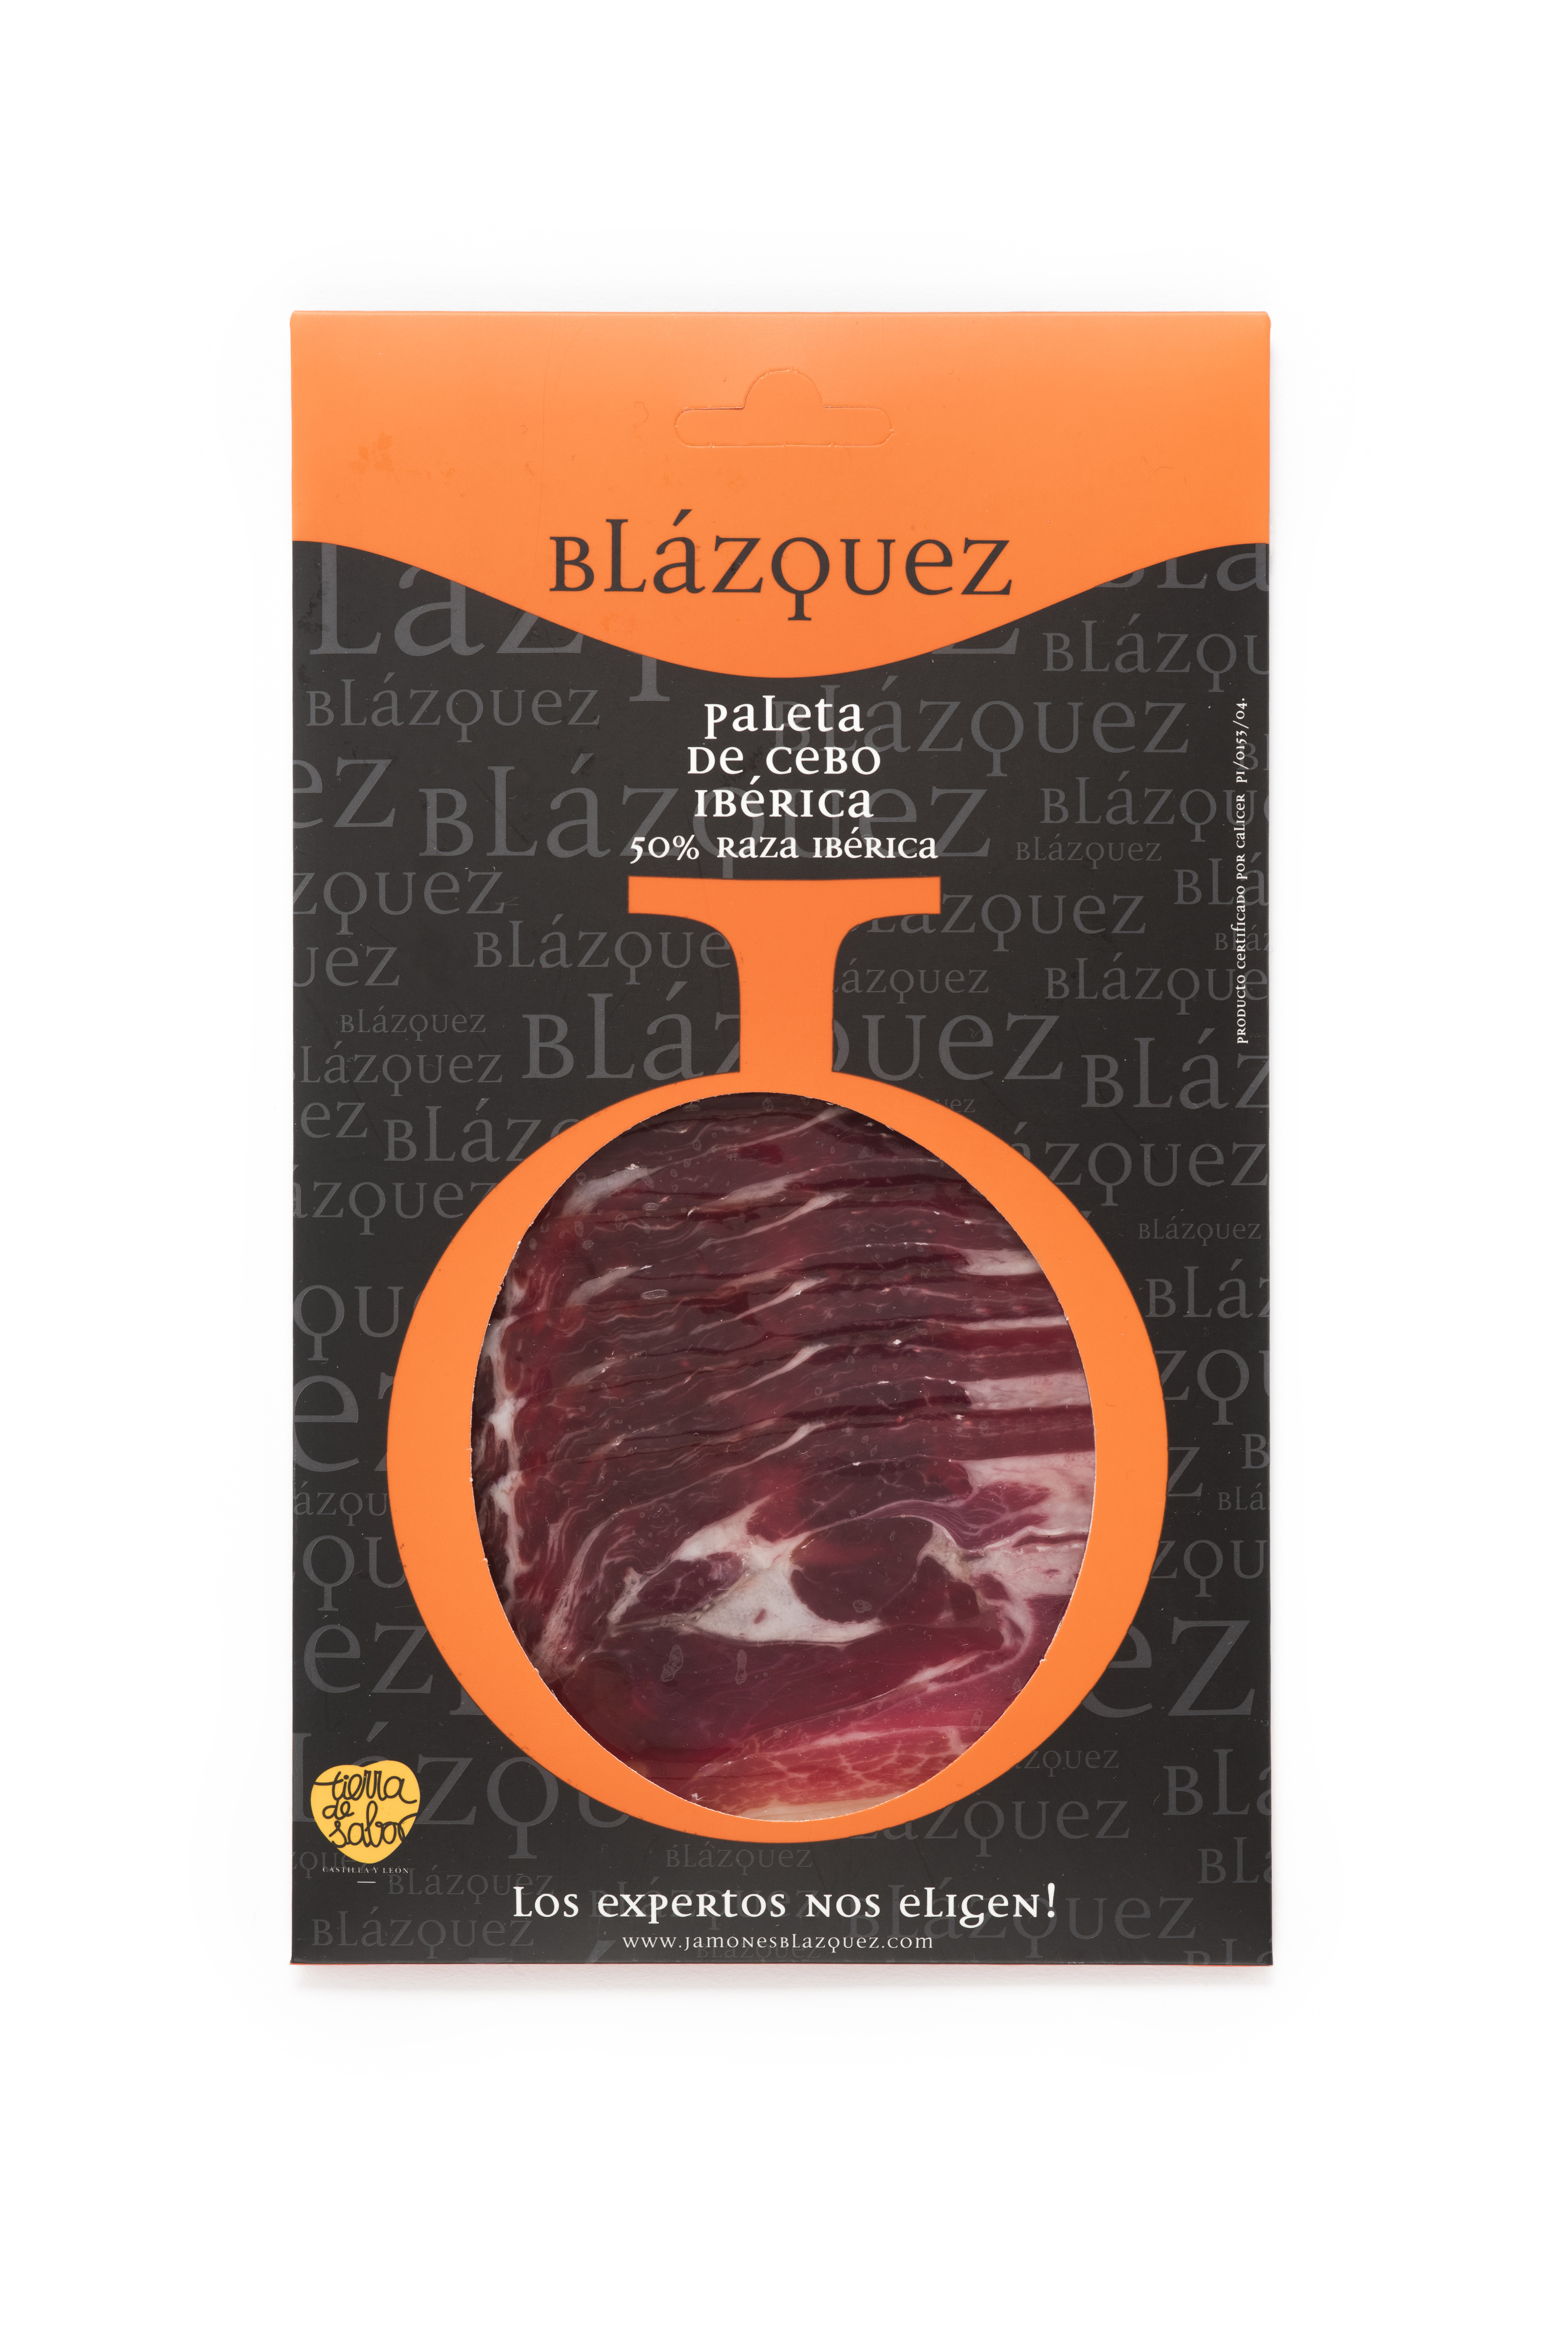 Blazquez Sliced Iberian Cebo Shoulder Ham (100g)